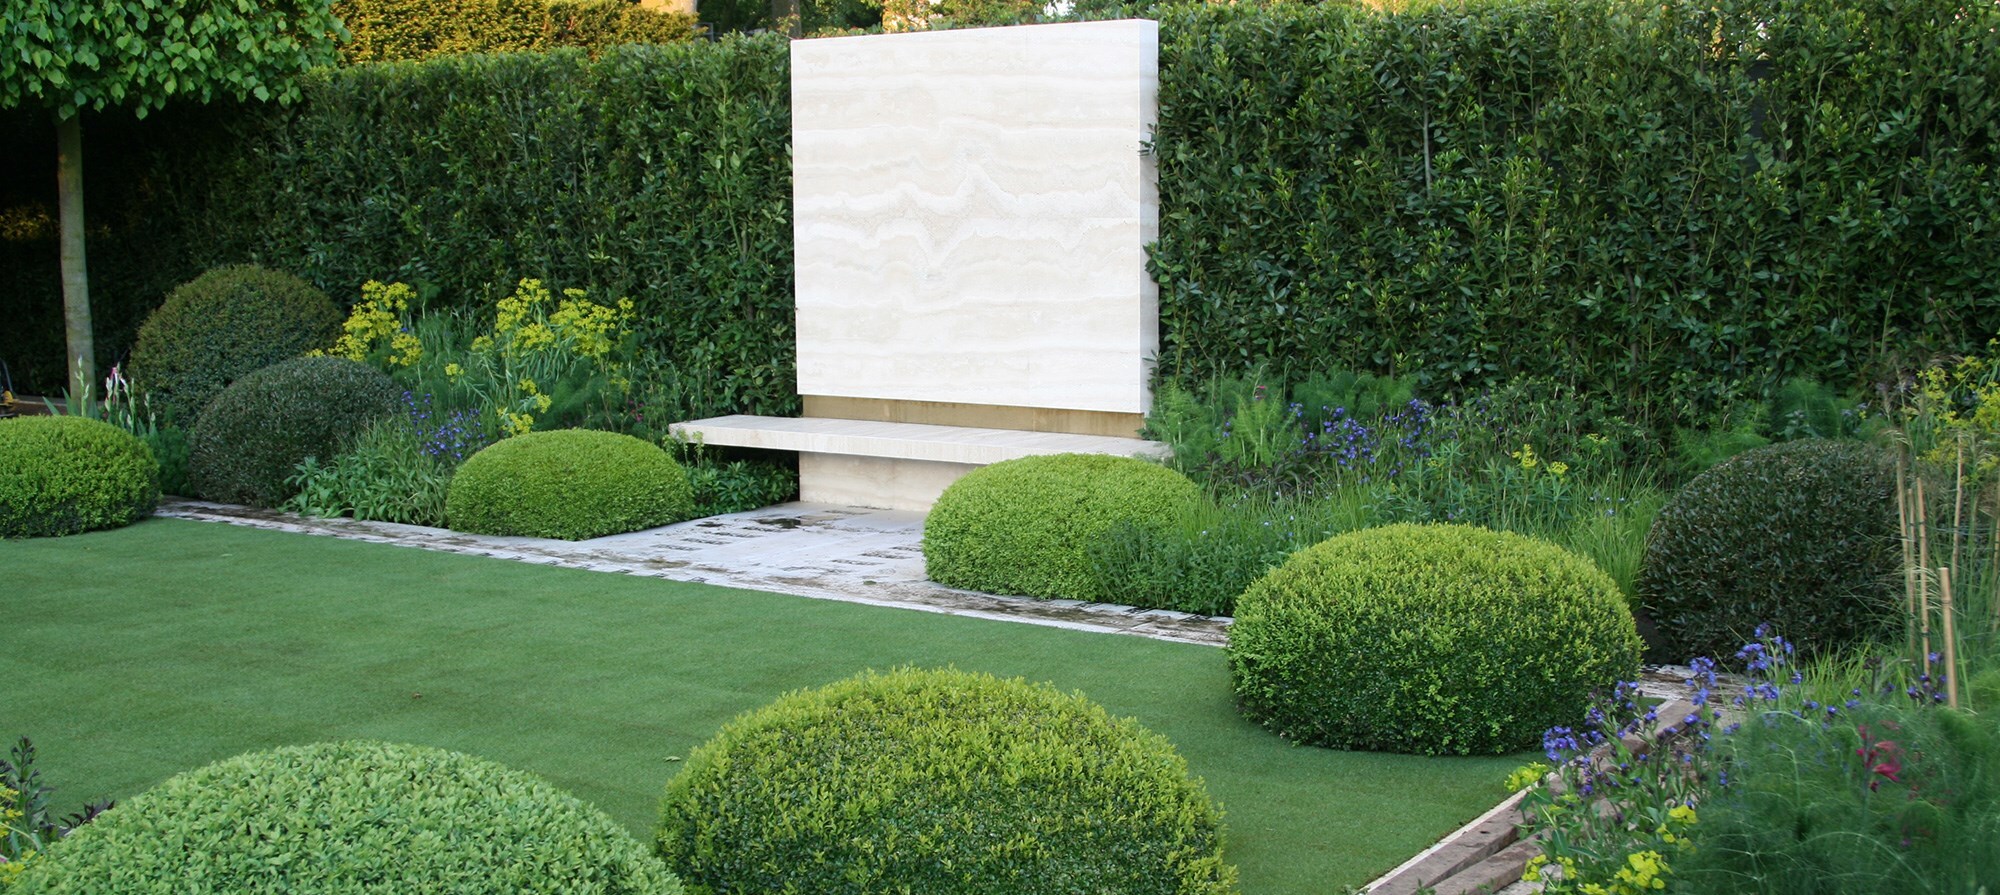 The Daily Telegraph Garden designed by Tomasso del Buono and Paul Gazerwitz	